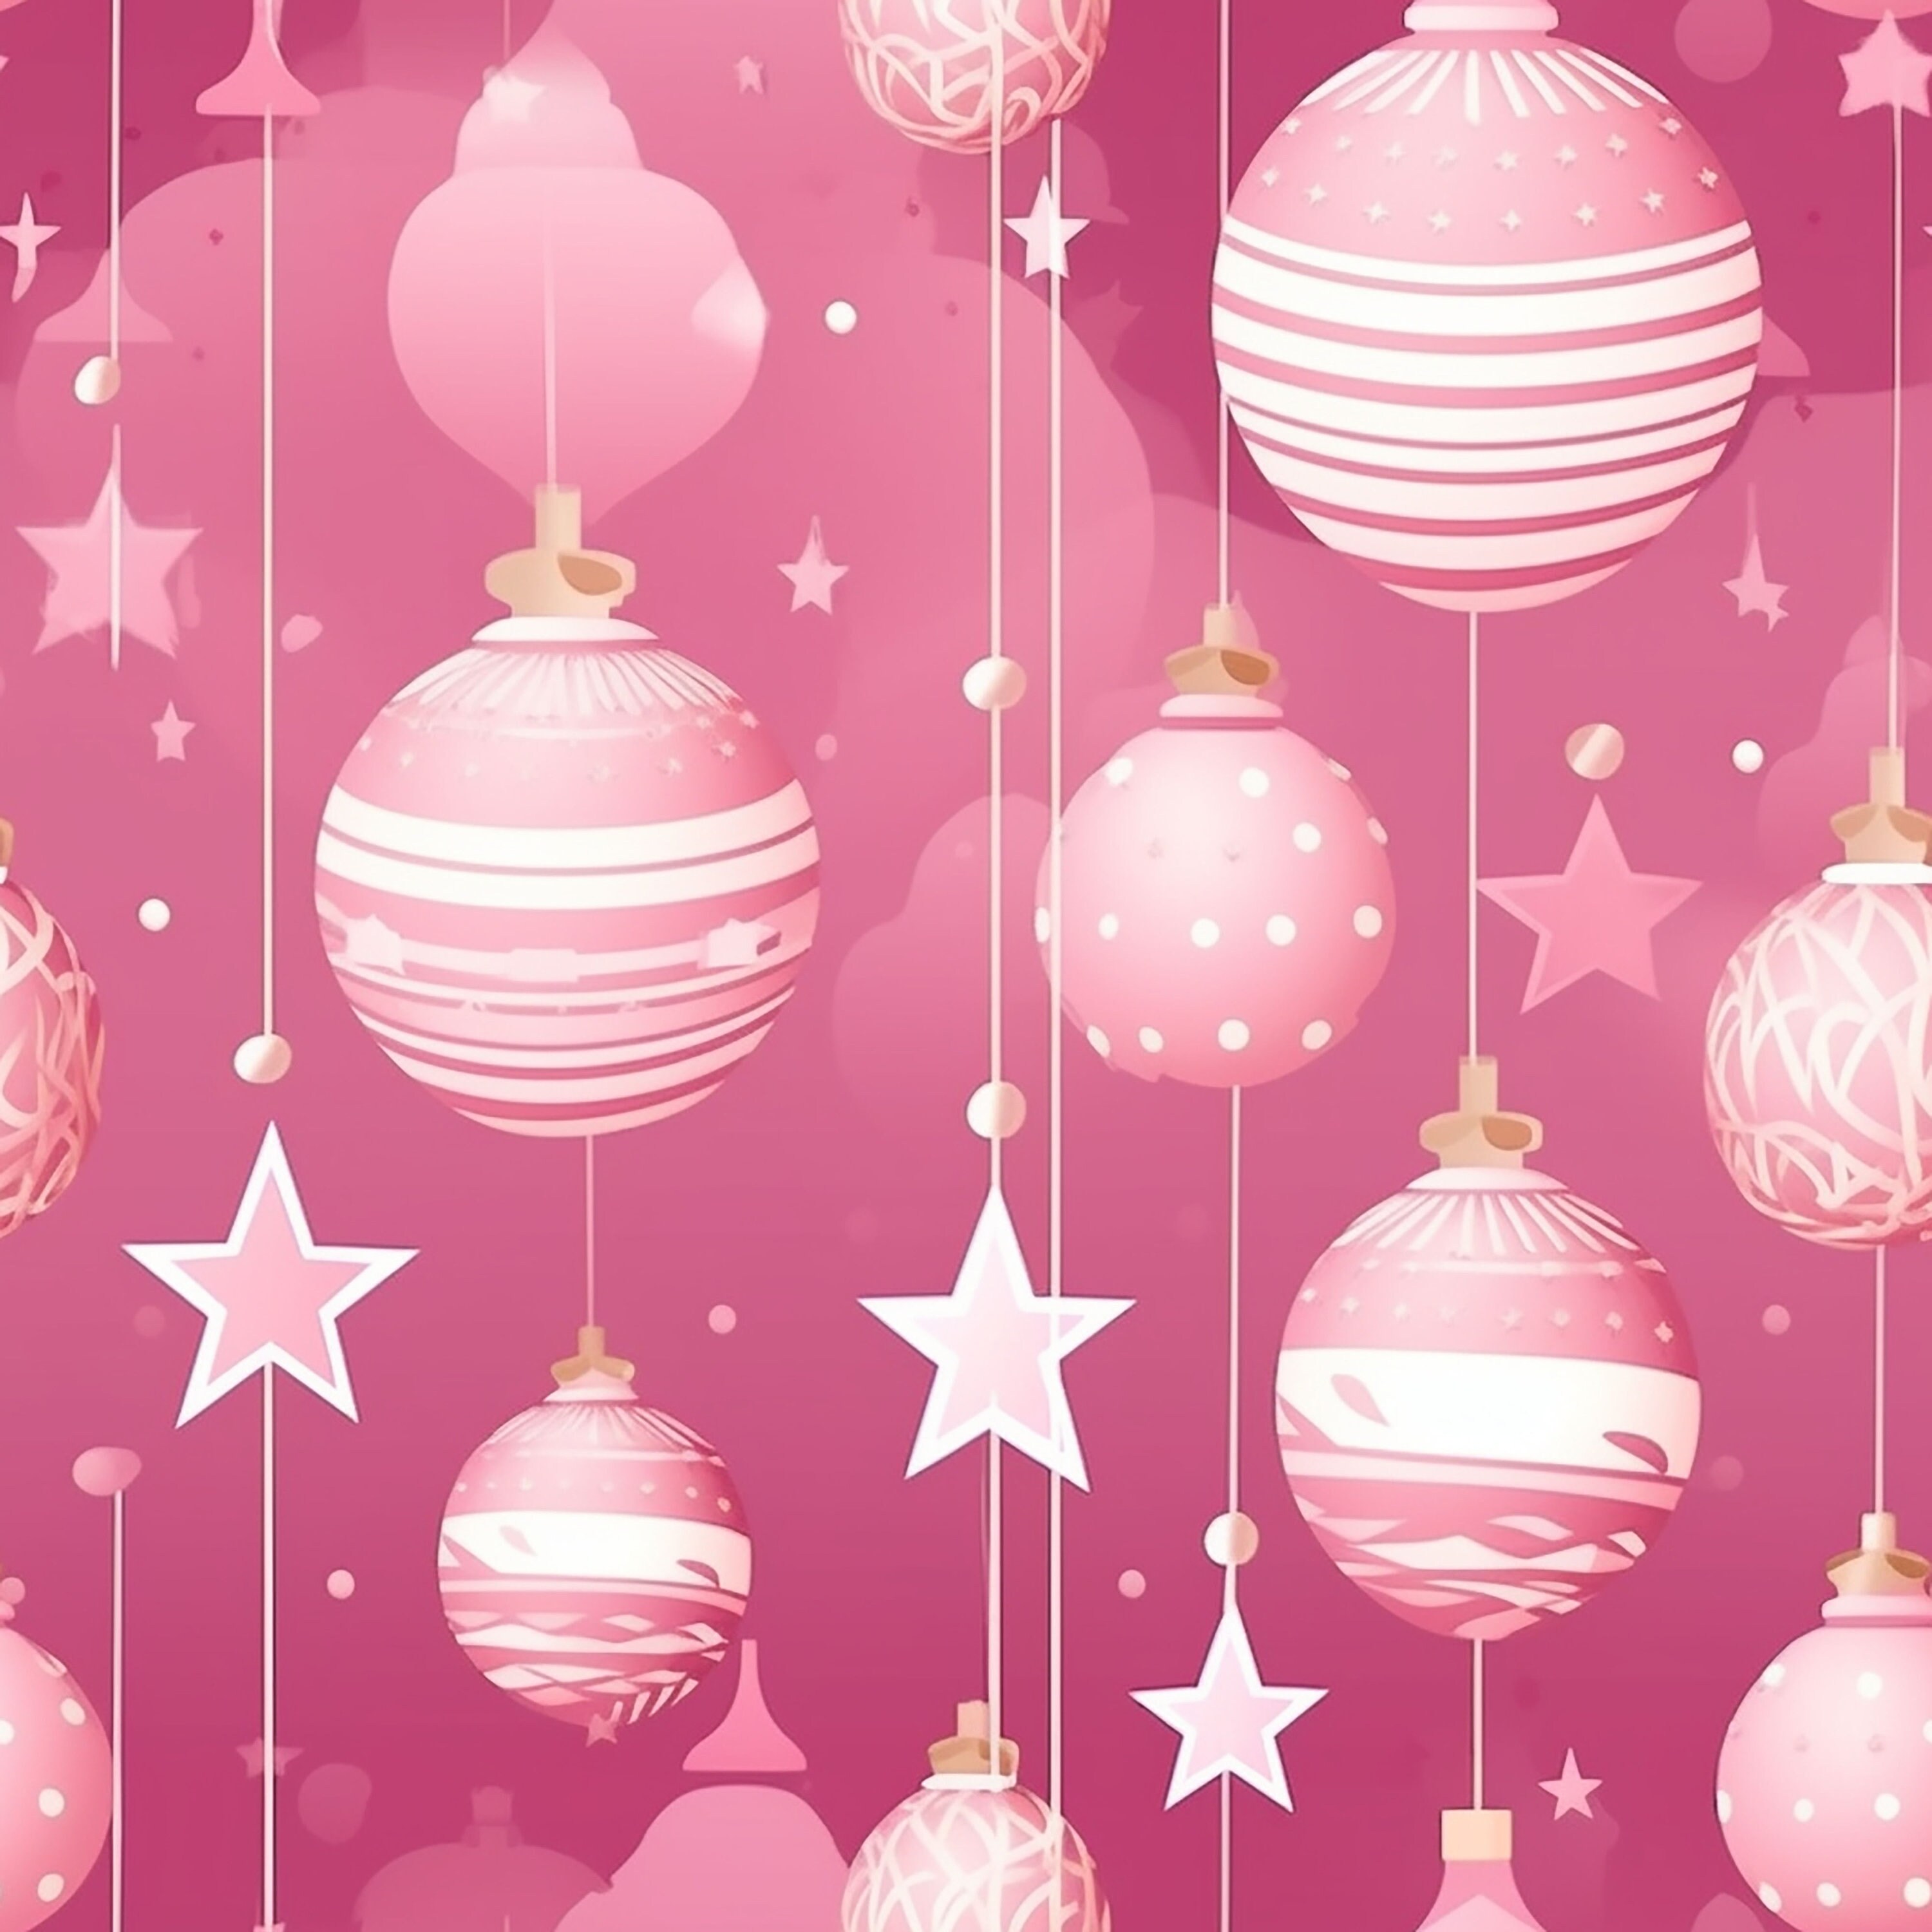 Pink Christmas Ephemera Digital Paper Graphic by giraffecreativestudio ·  Creative Fabrica